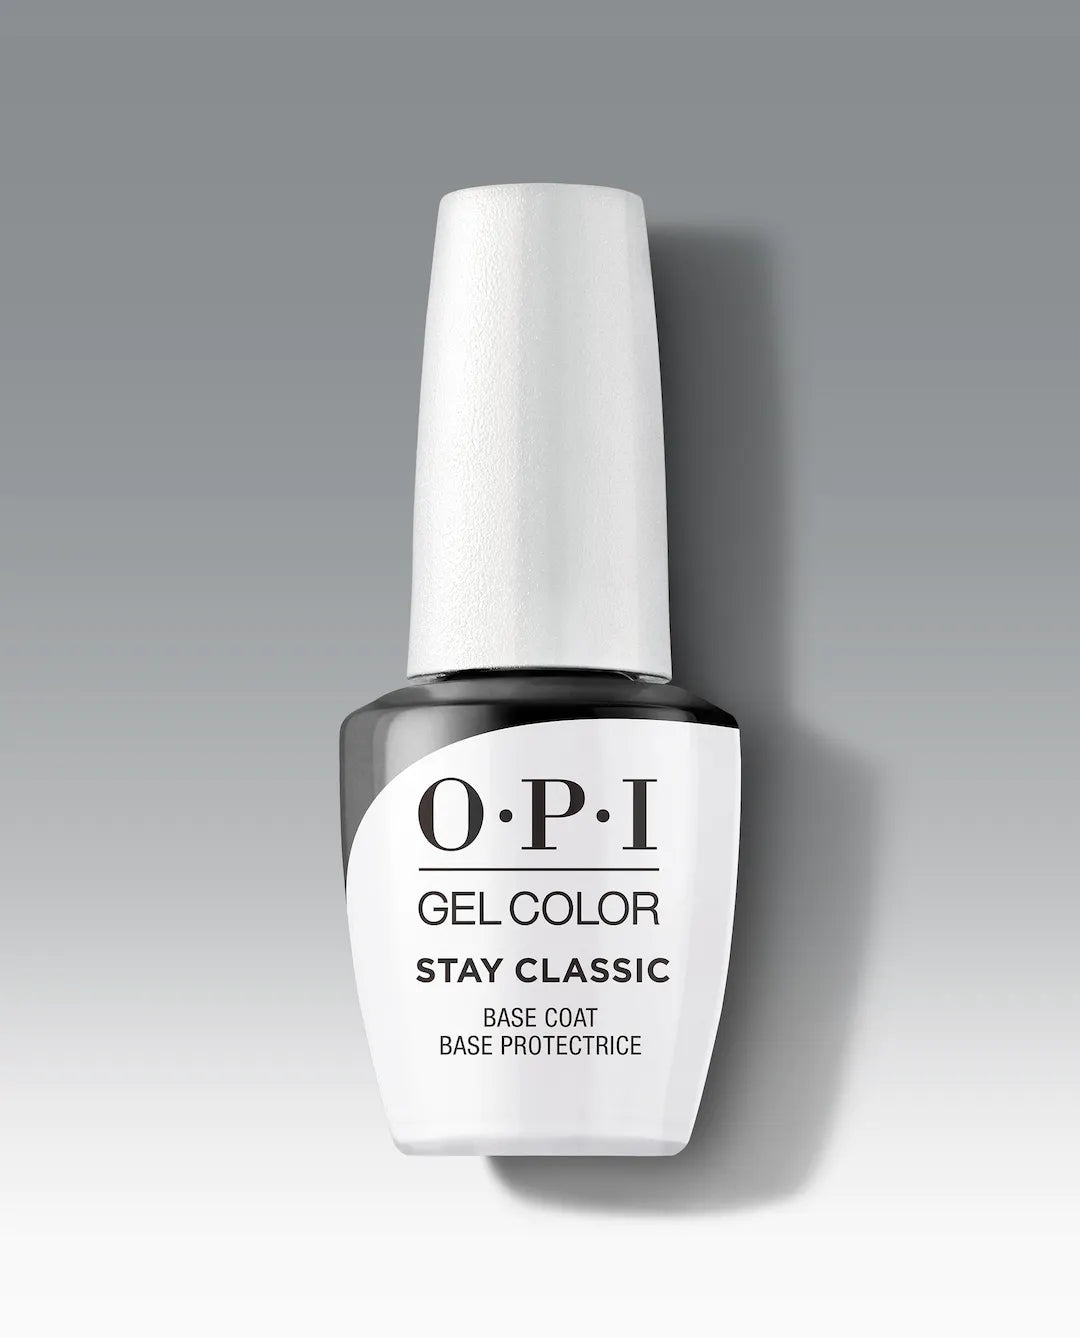 OPI gel color stay classic base coat - alapozó gél lakk